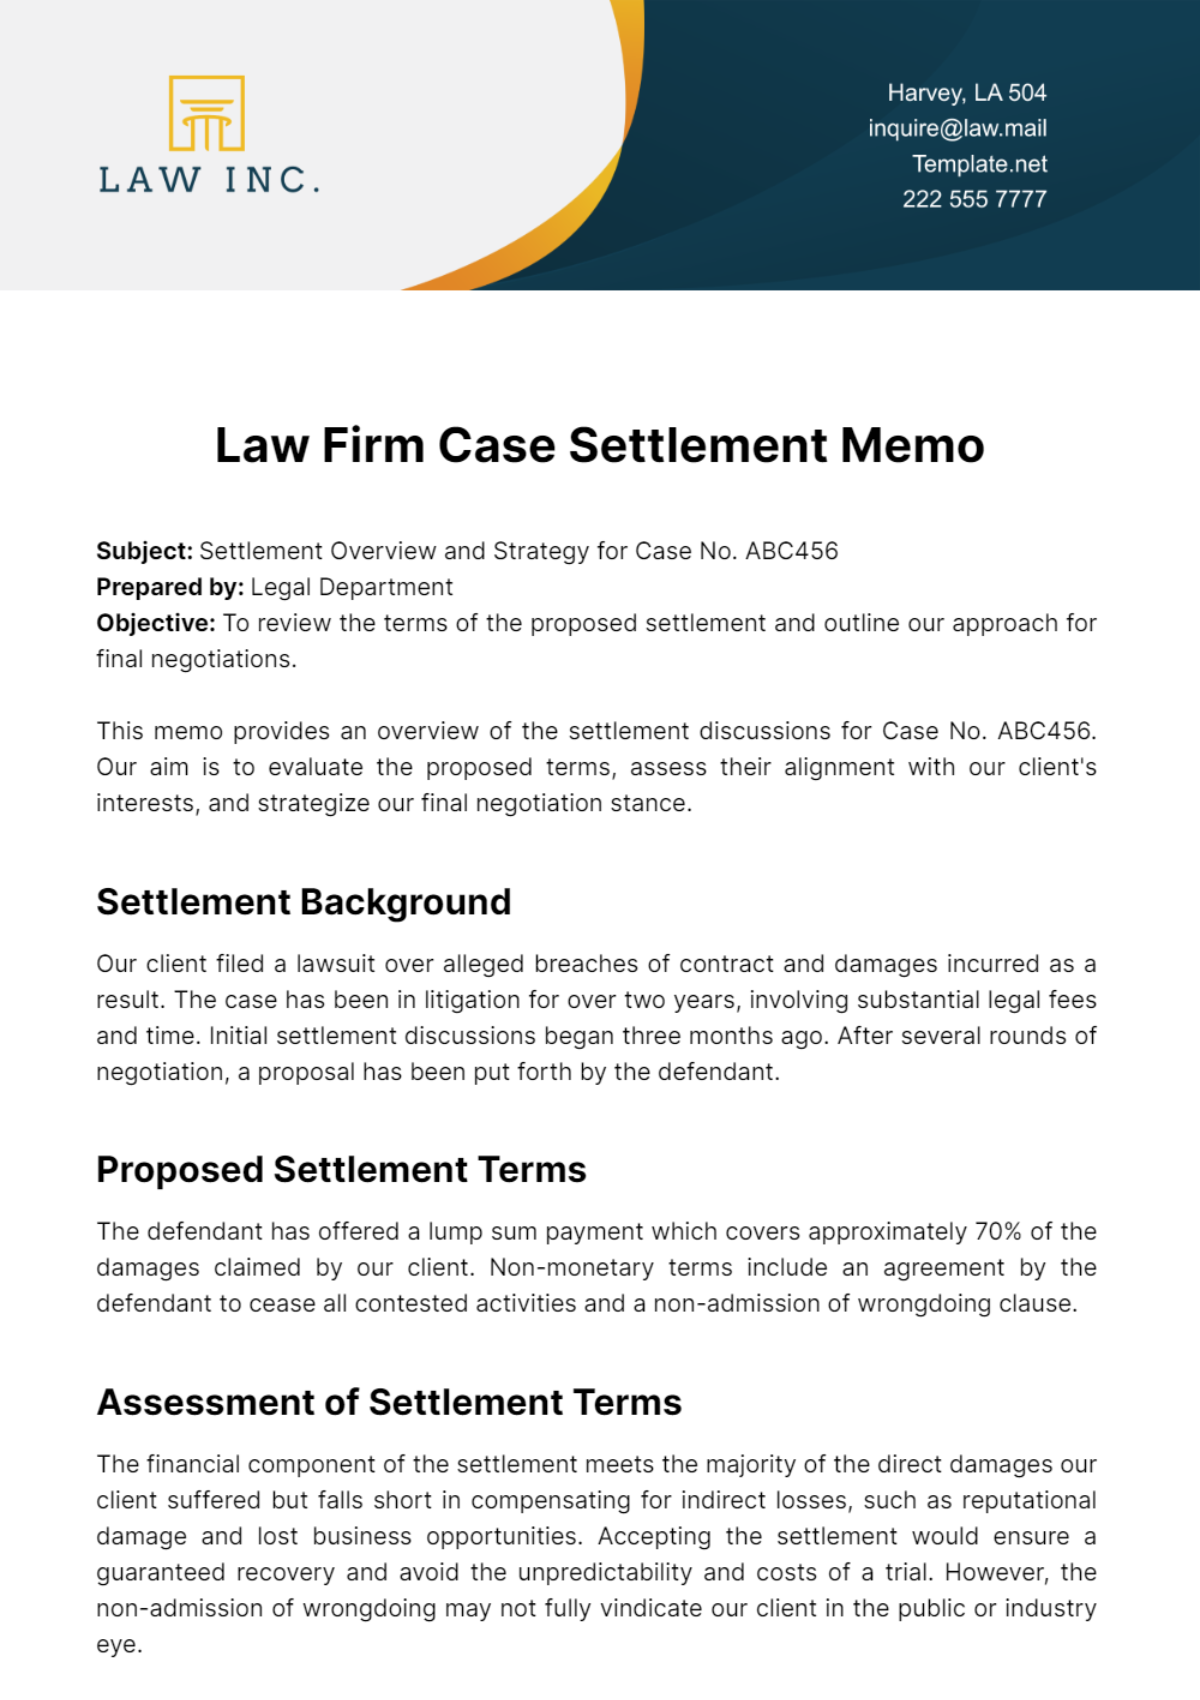 Law Firm Case Settlement Memo Template